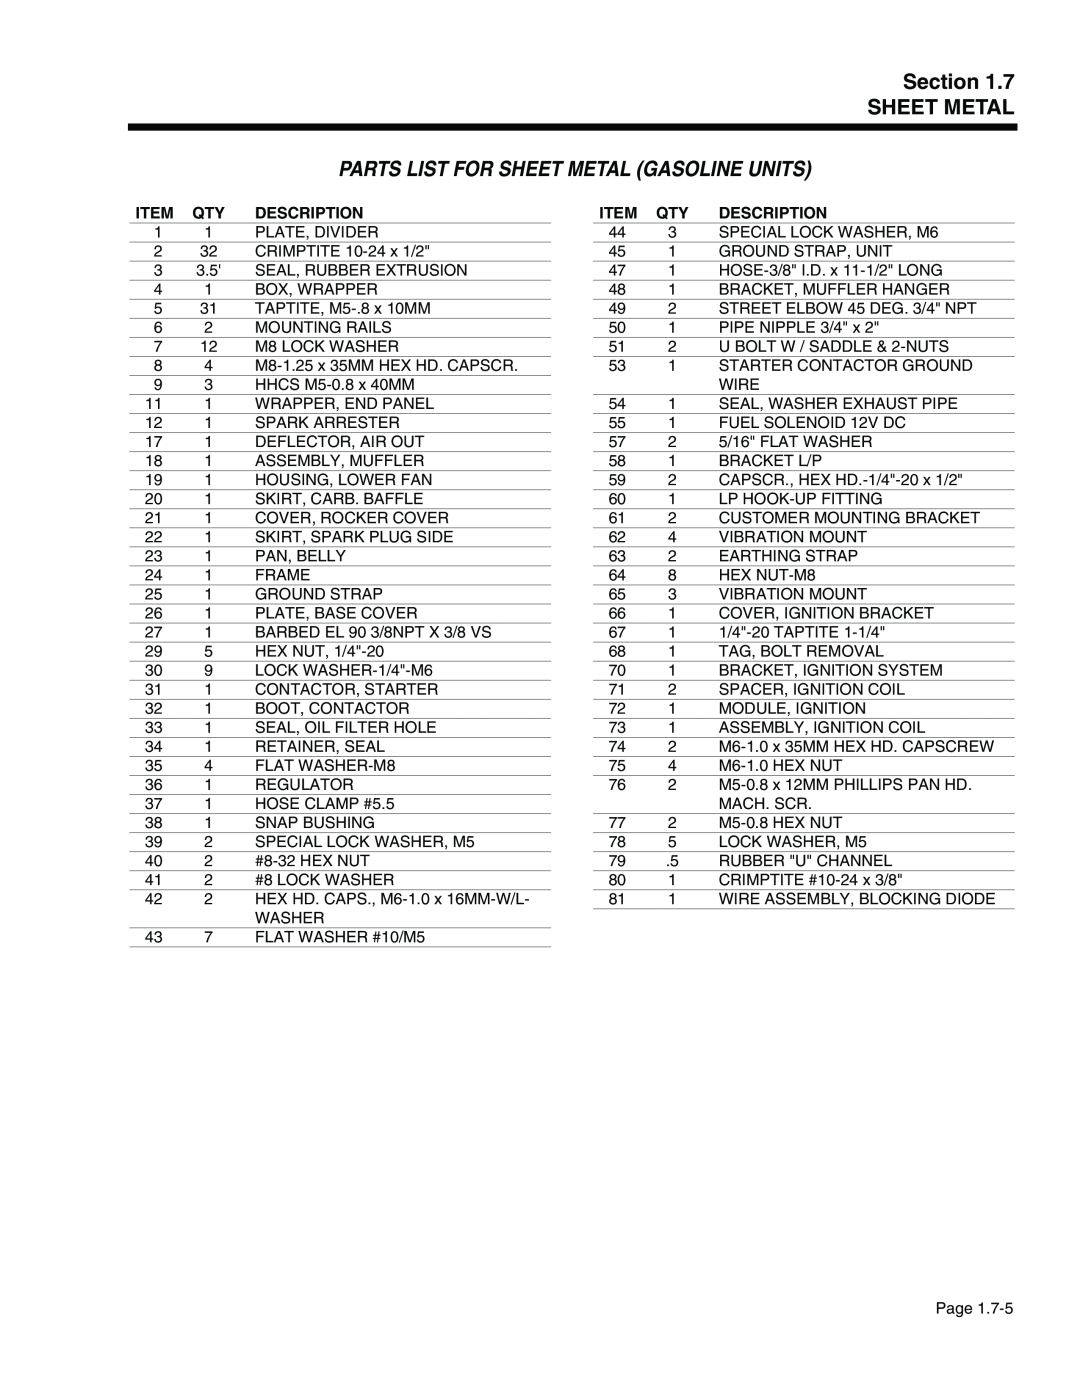 Generac Power Systems 941-2, 940-2 Section SHEET METAL, Parts List For Sheet Metal Gasoline Units, Description 